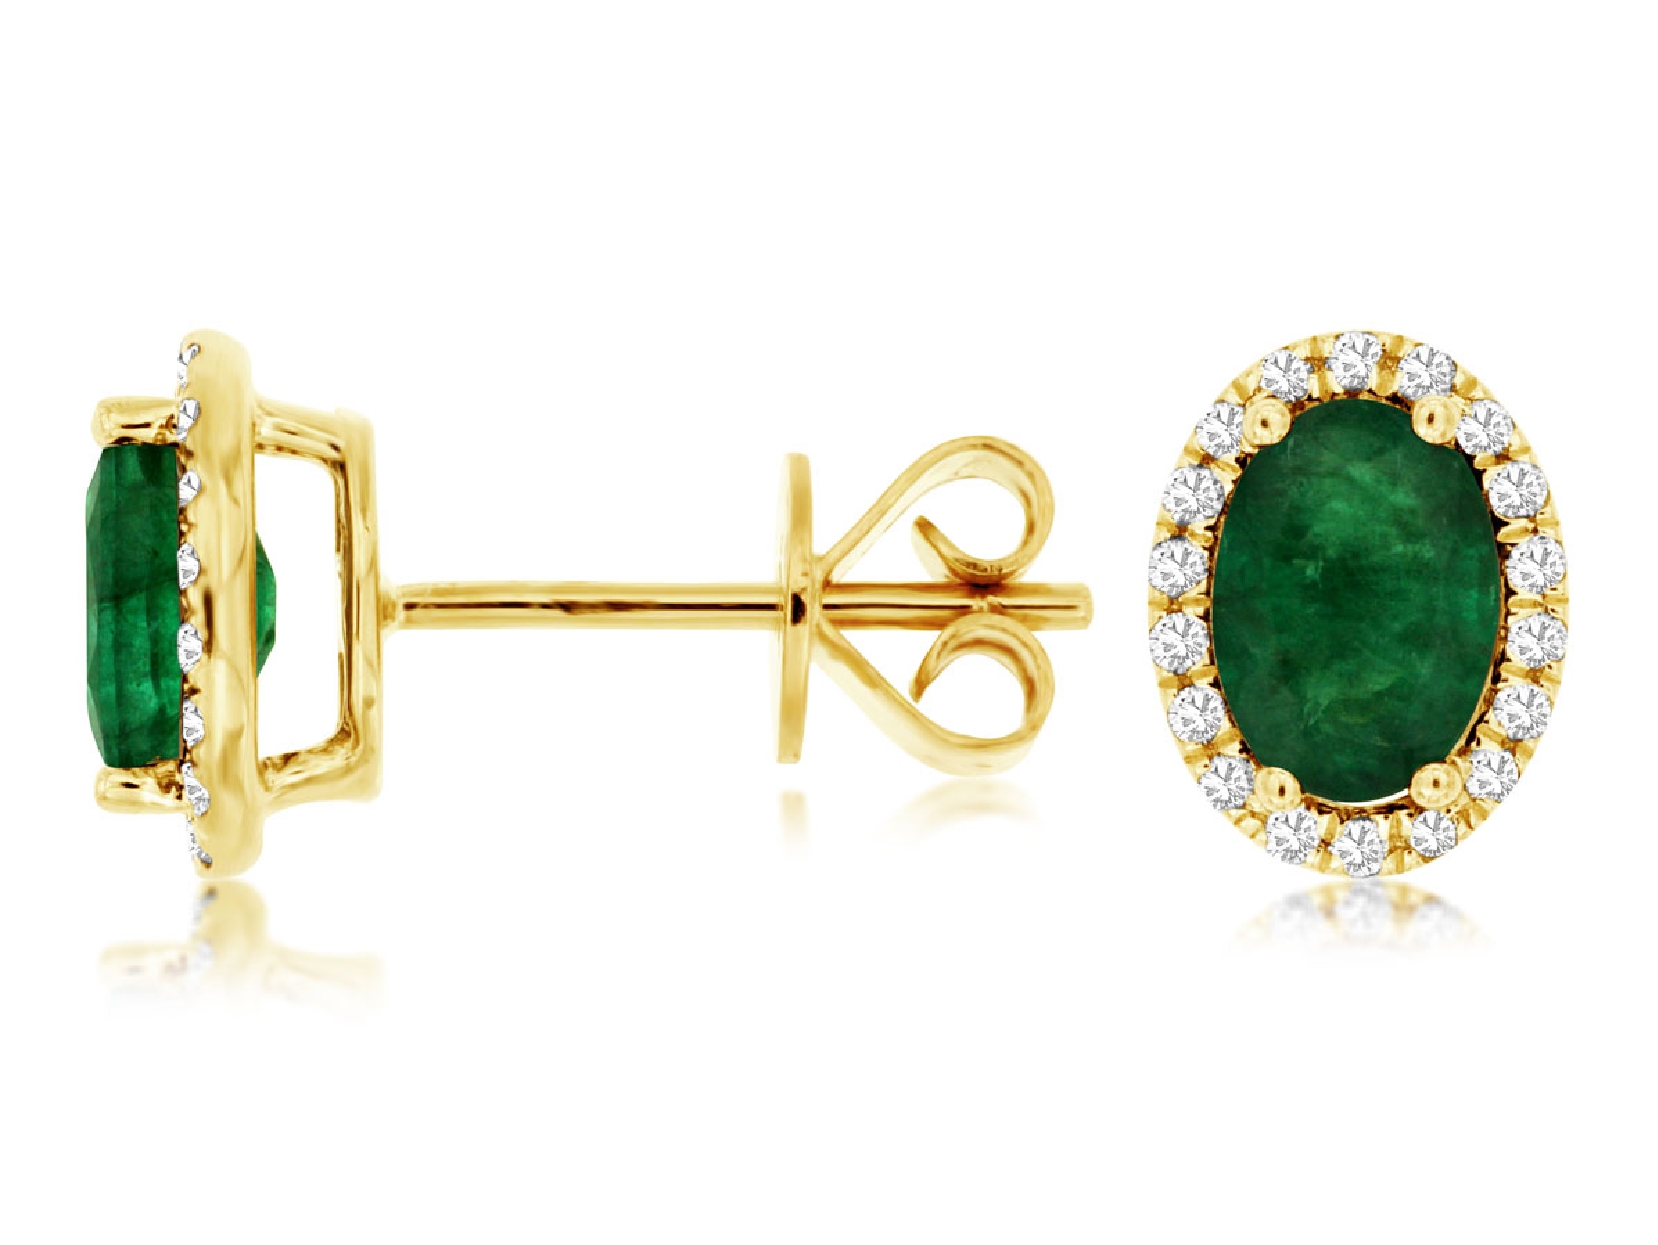 14K Yellow Gold Oval Emerald Stud Earrings with Diamond Halos

1.40cttw Emeralds
0.19cttw Diamonds 